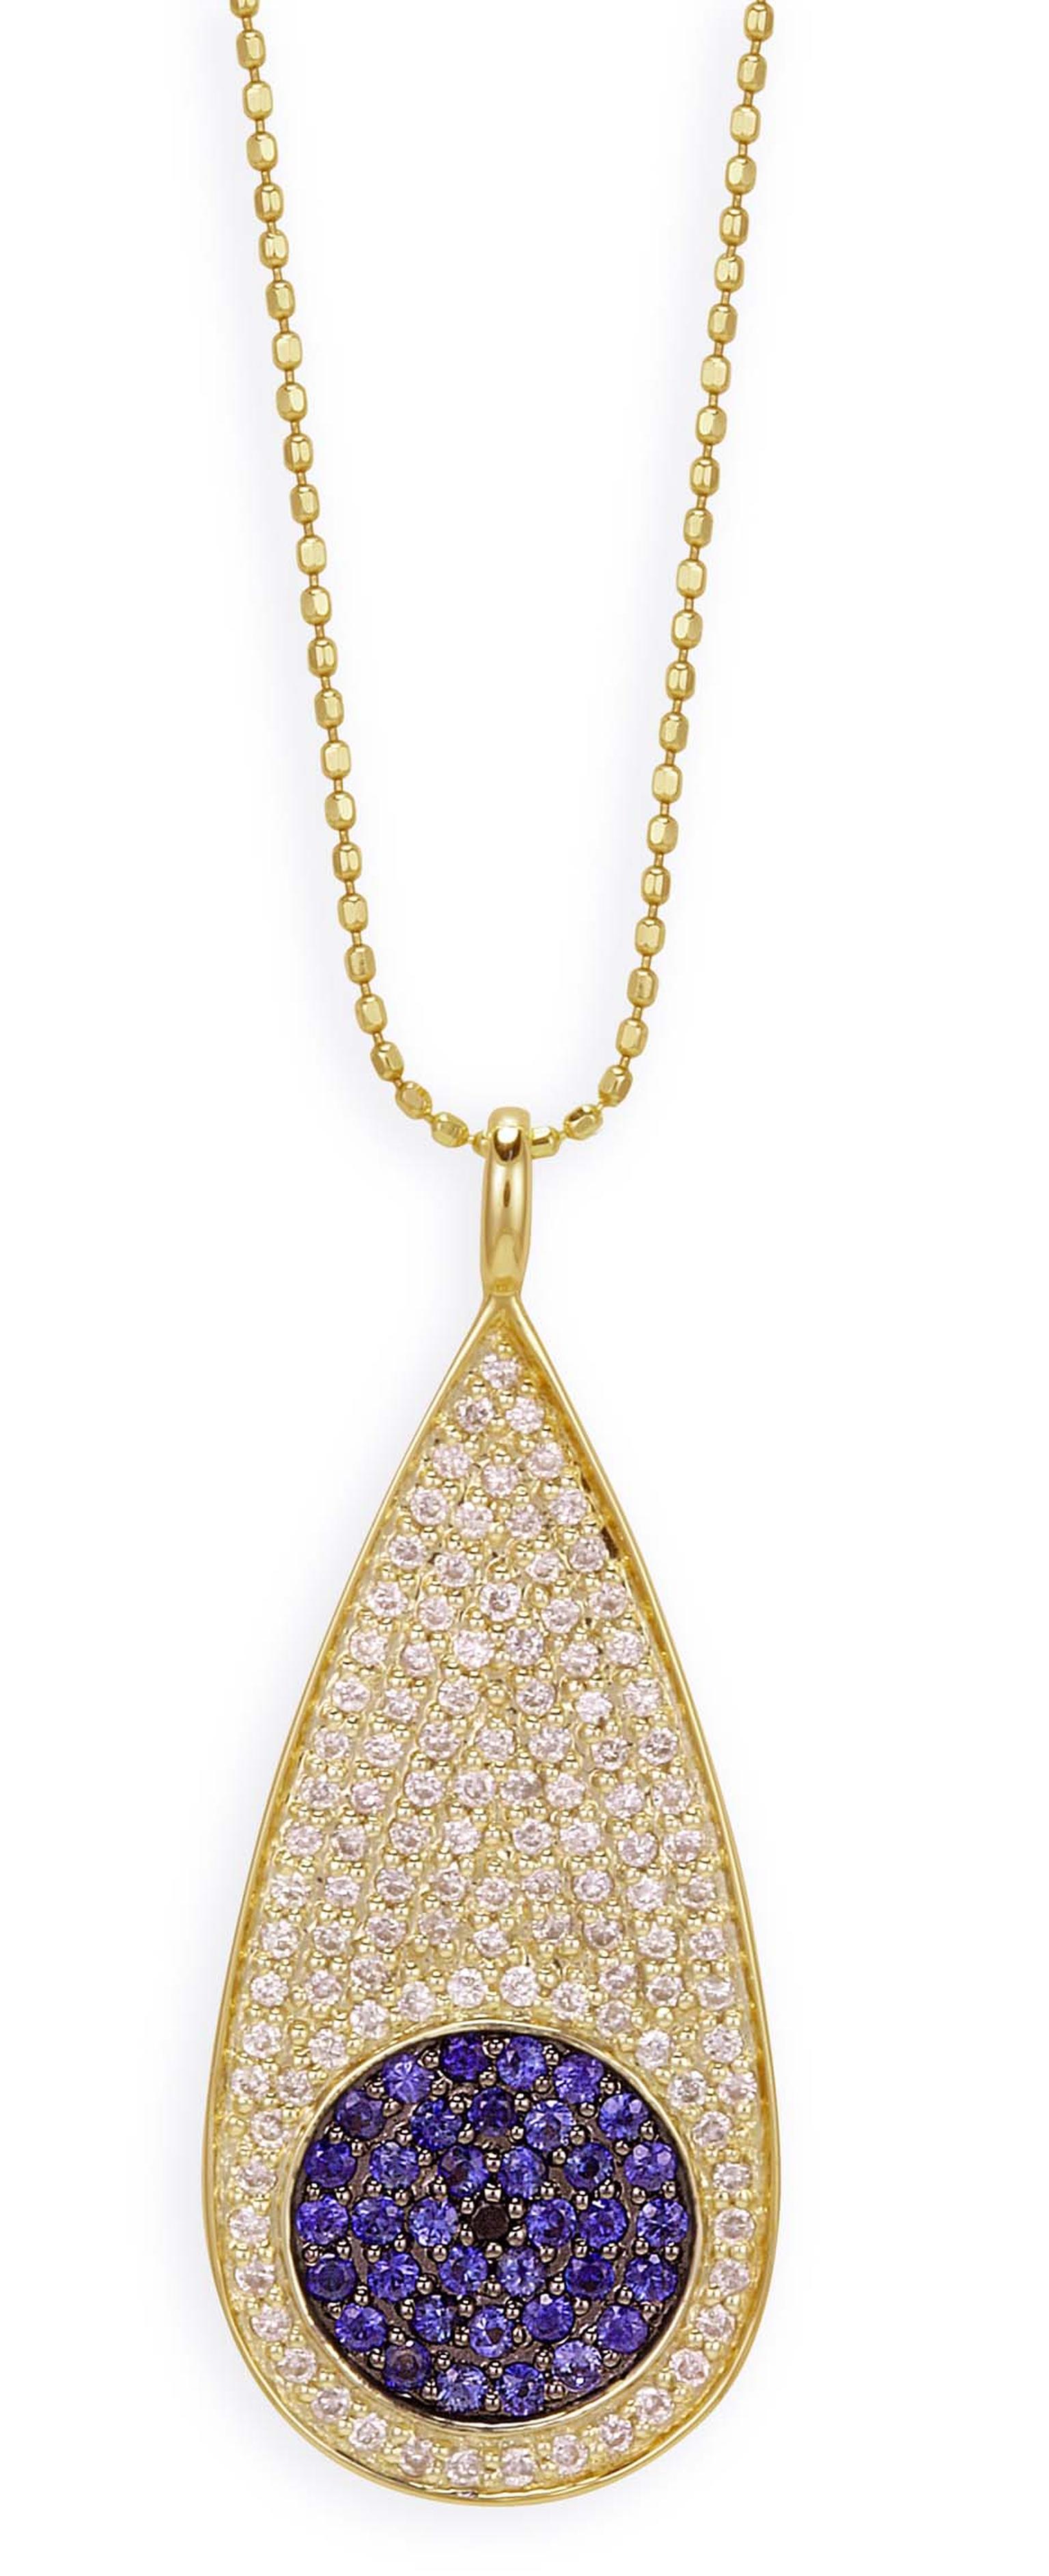 Sydney Evan yellow gold Teardrop Evil Eye necklace featuring pavé blue sapphires and diamonds.